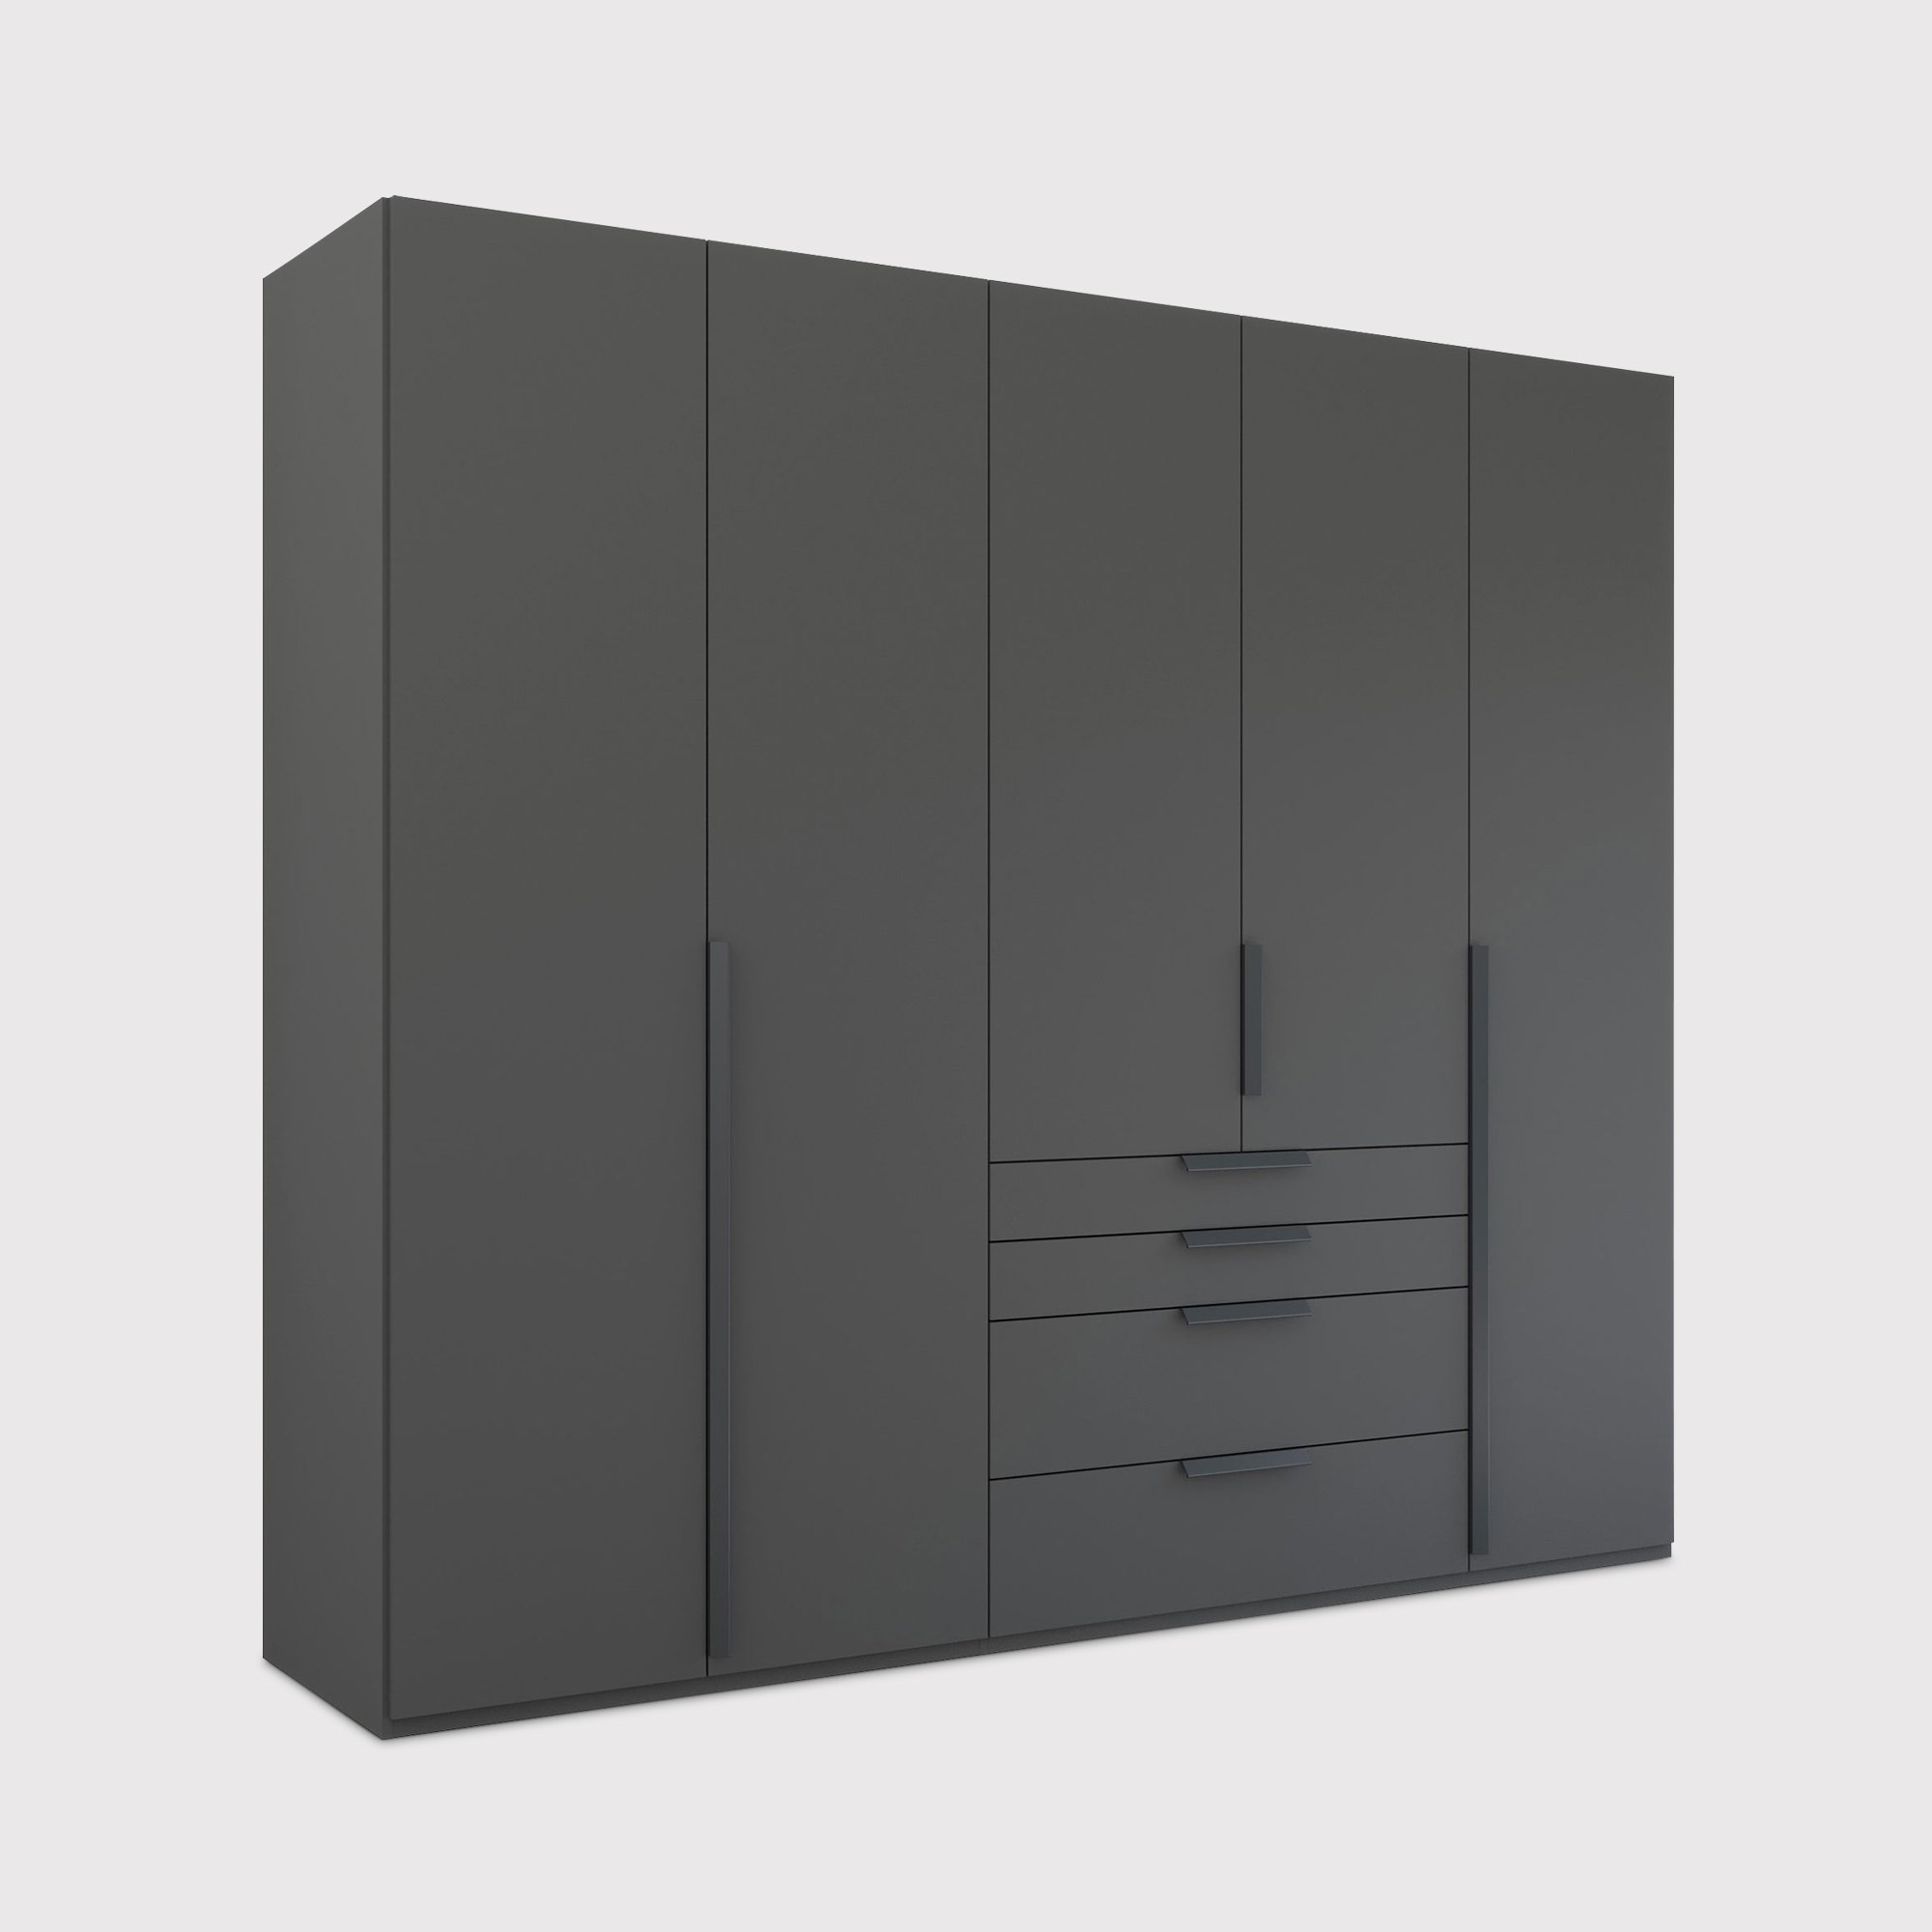 Frans 5 Door 4 Drawer Wardrobe 251cm, Black | Barker & Stonehouse